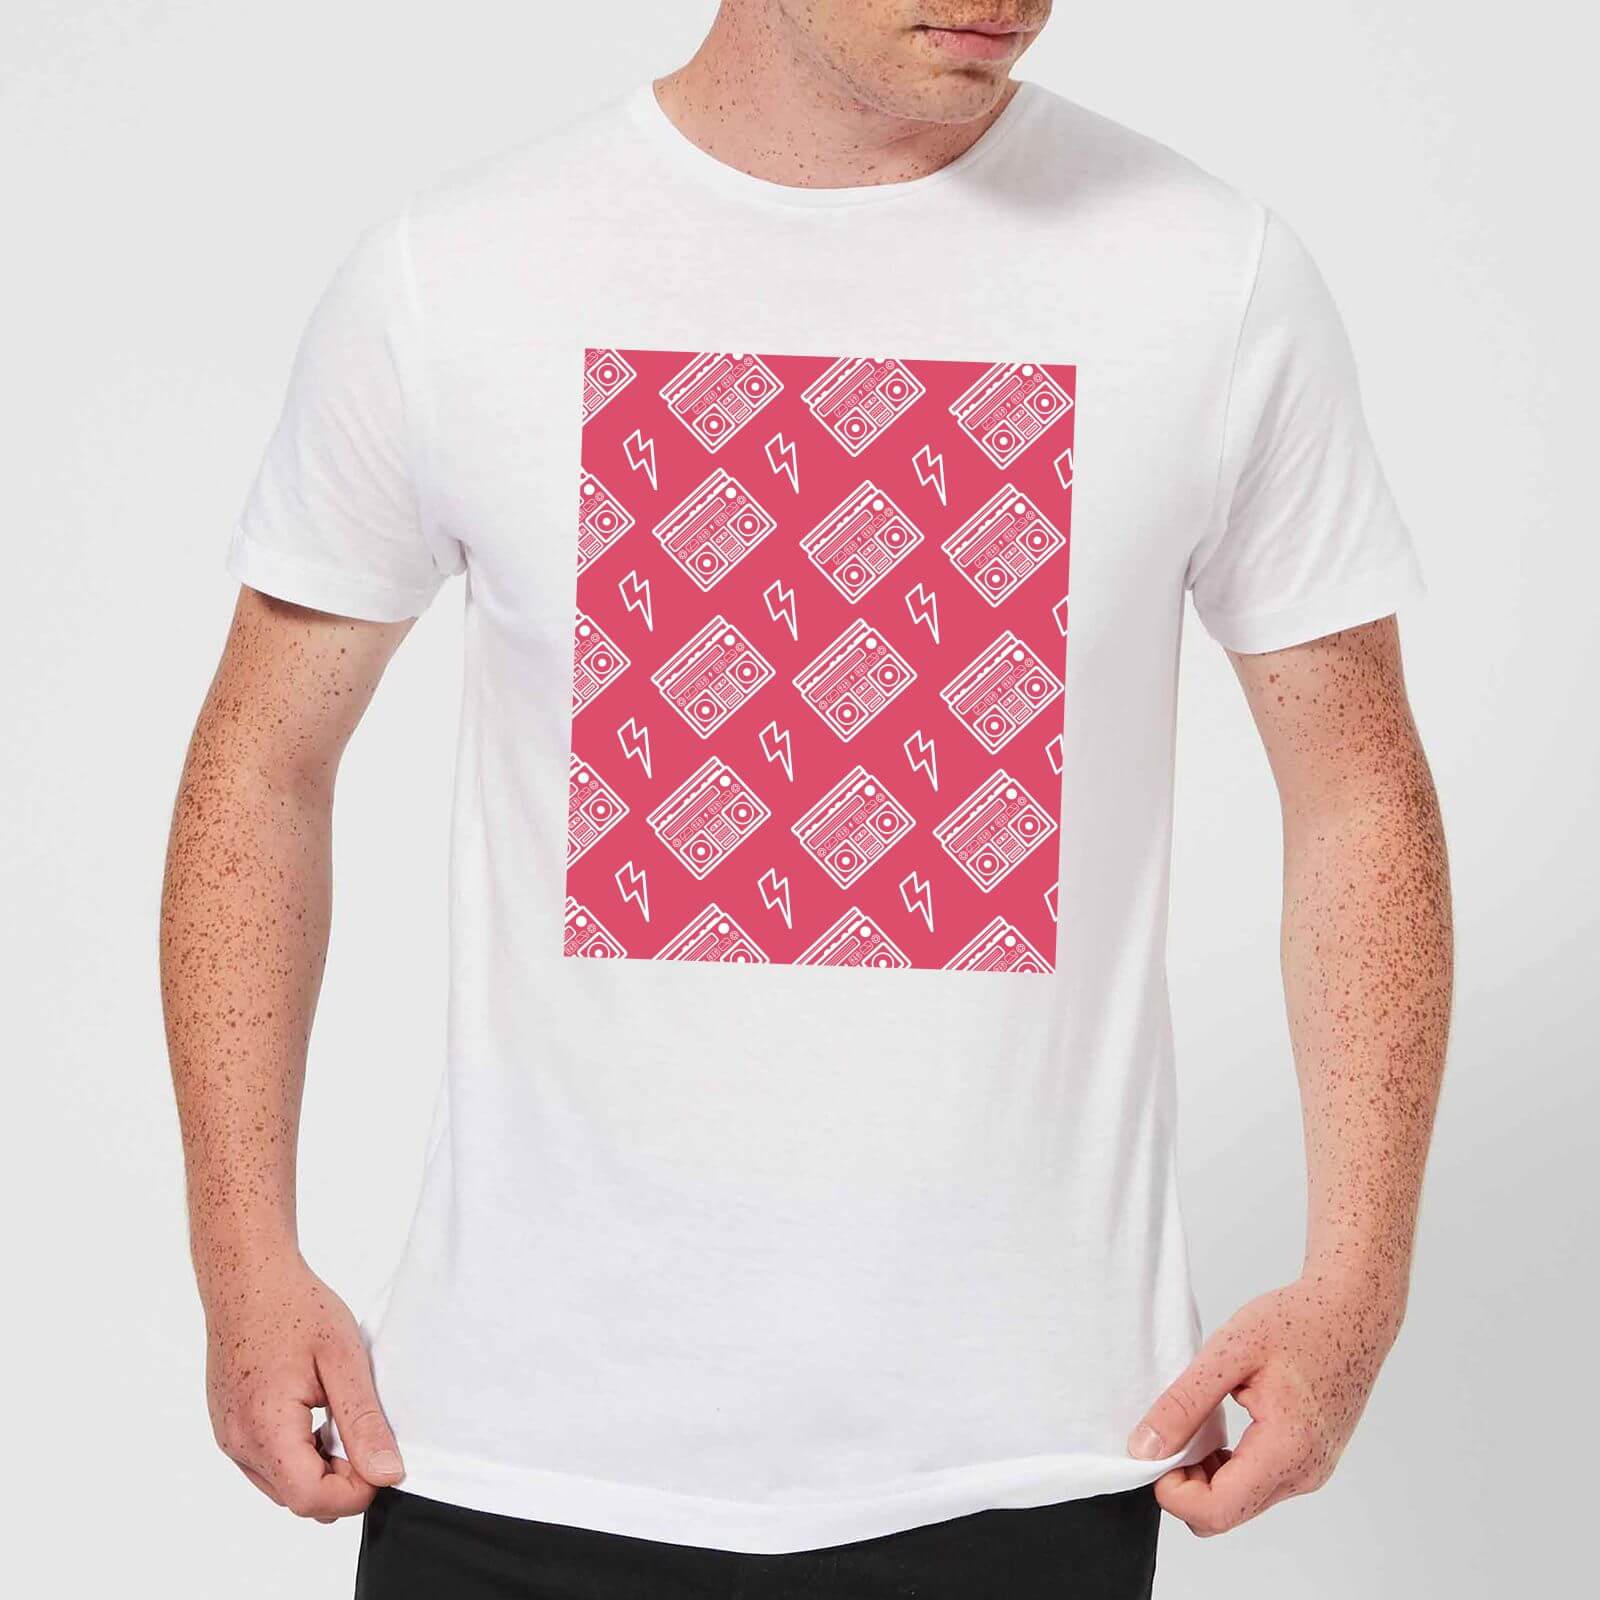 Boombox Pattern Pink Men's T-Shirt - White - XS - White